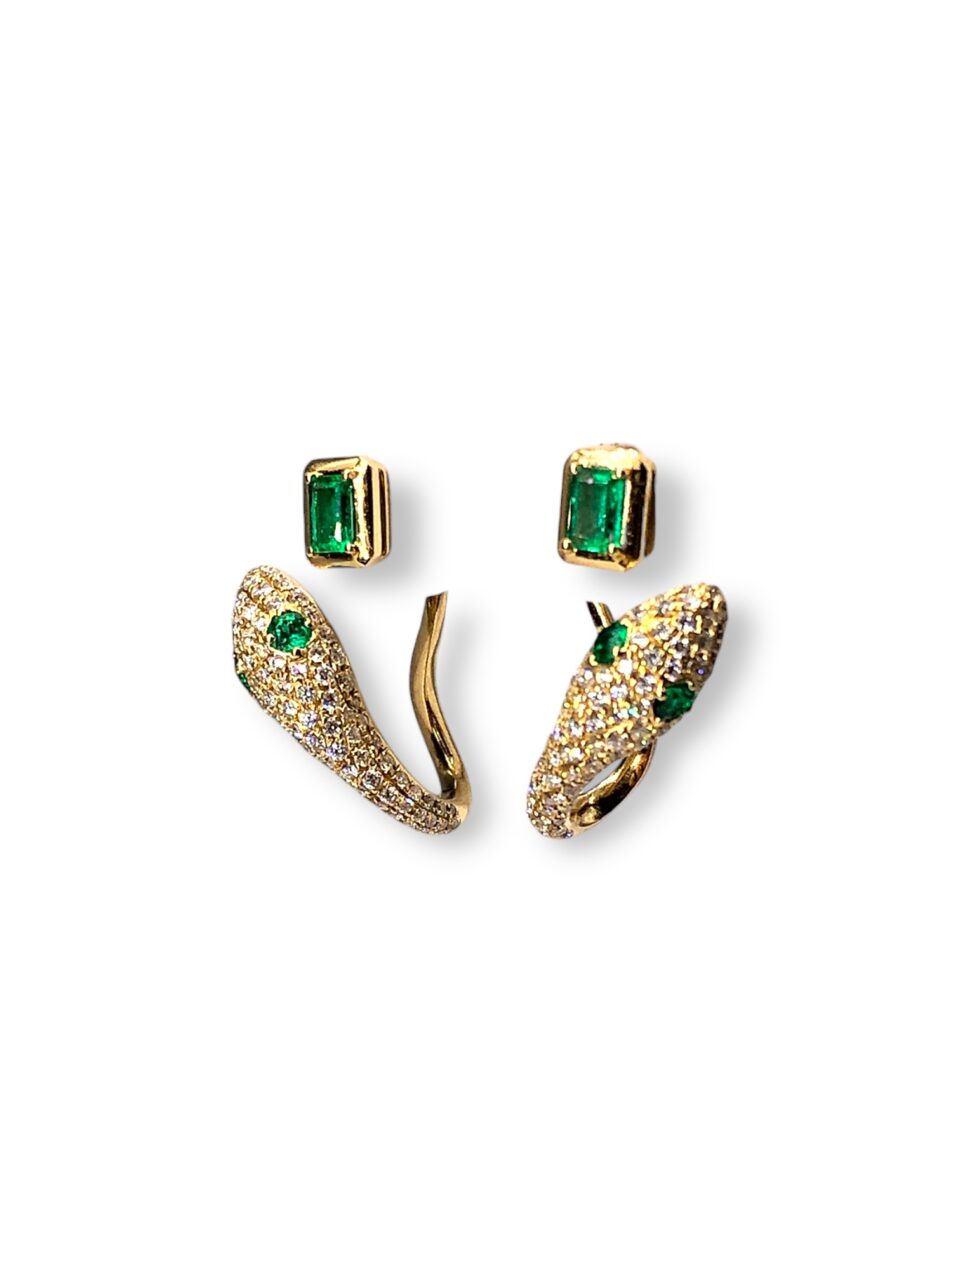 colombian emeralds, muzo emeralds, alpine green, emerald earrings, george smith